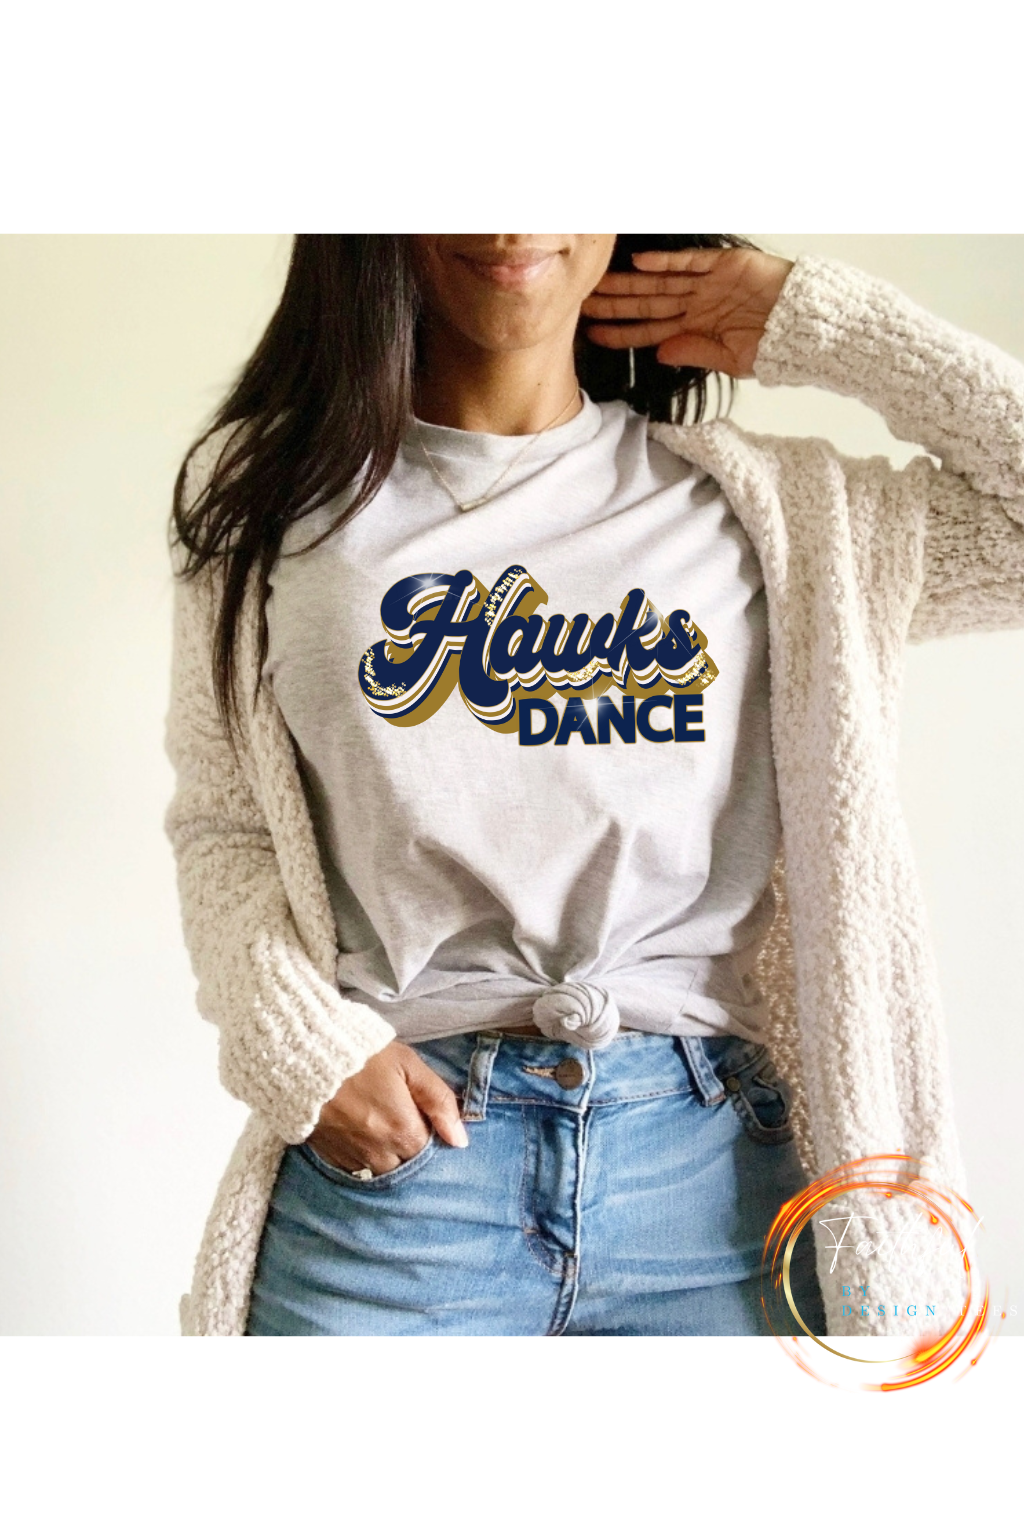 Hawks Dance T-Shirt (Youth & Adult)